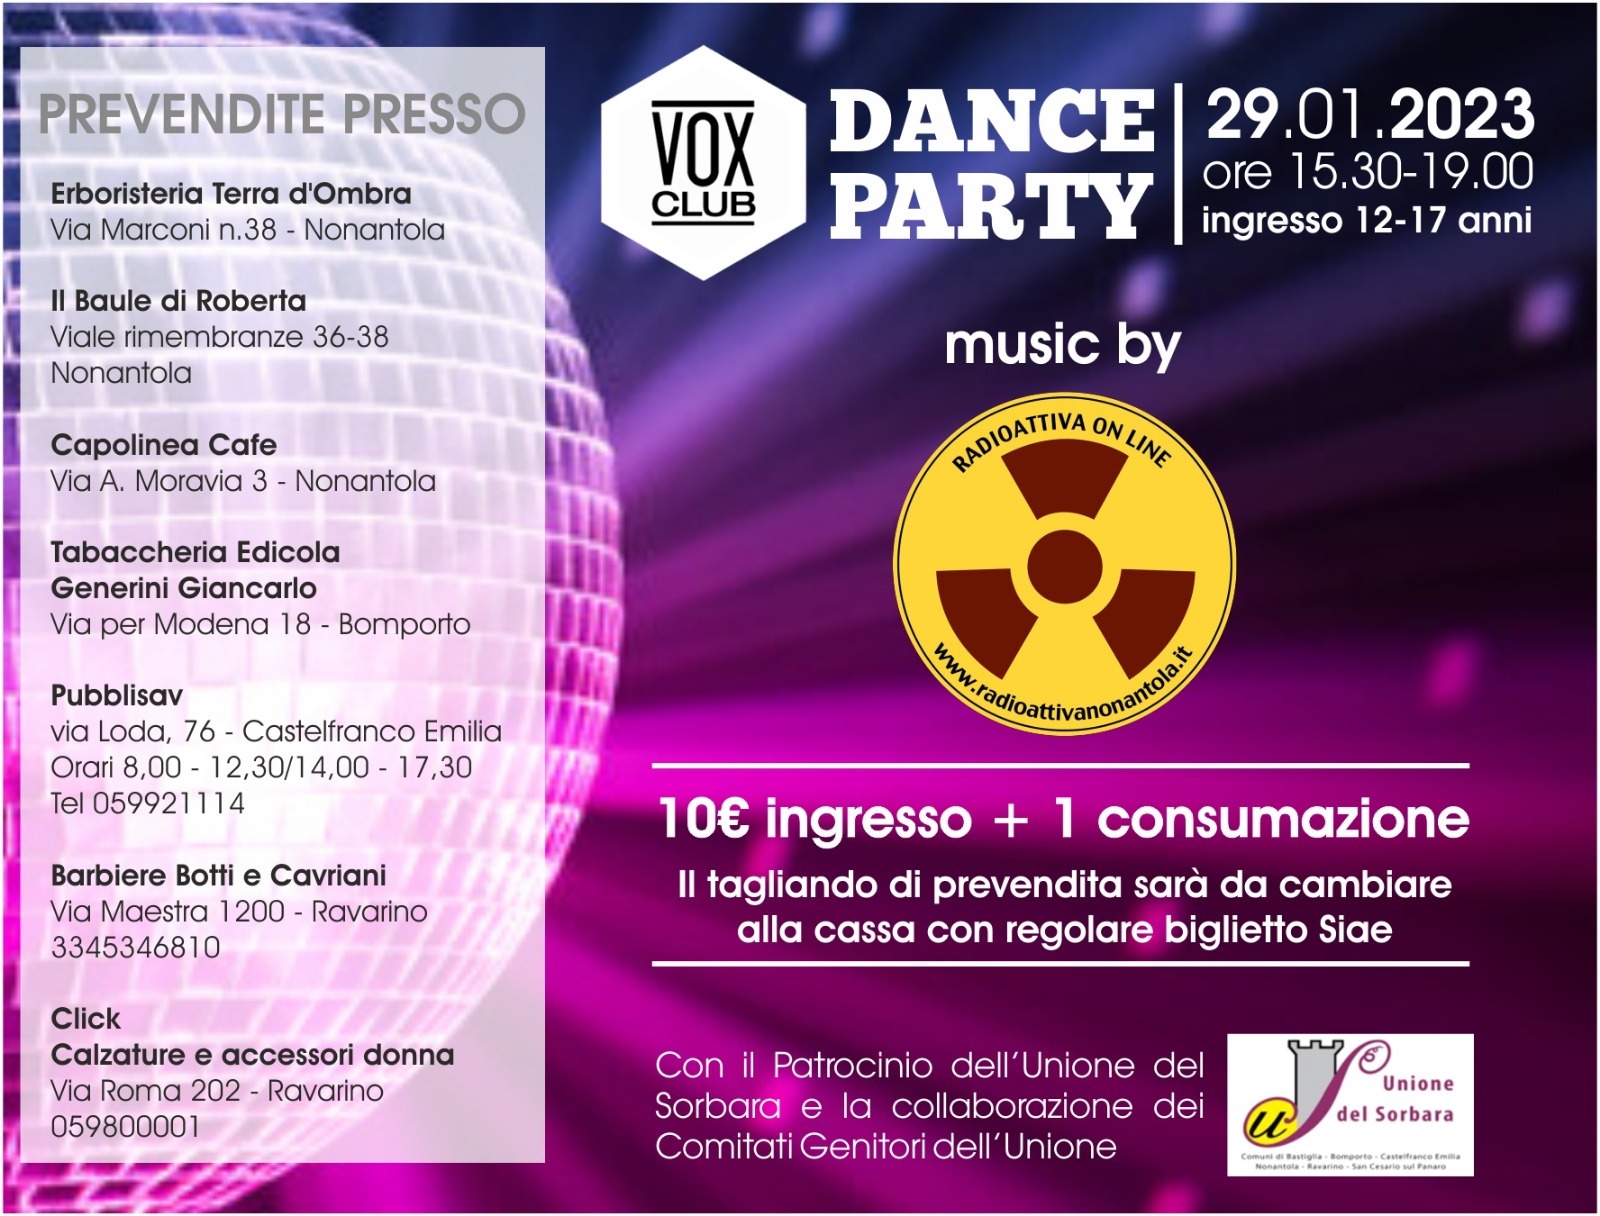 Vox Dance Party